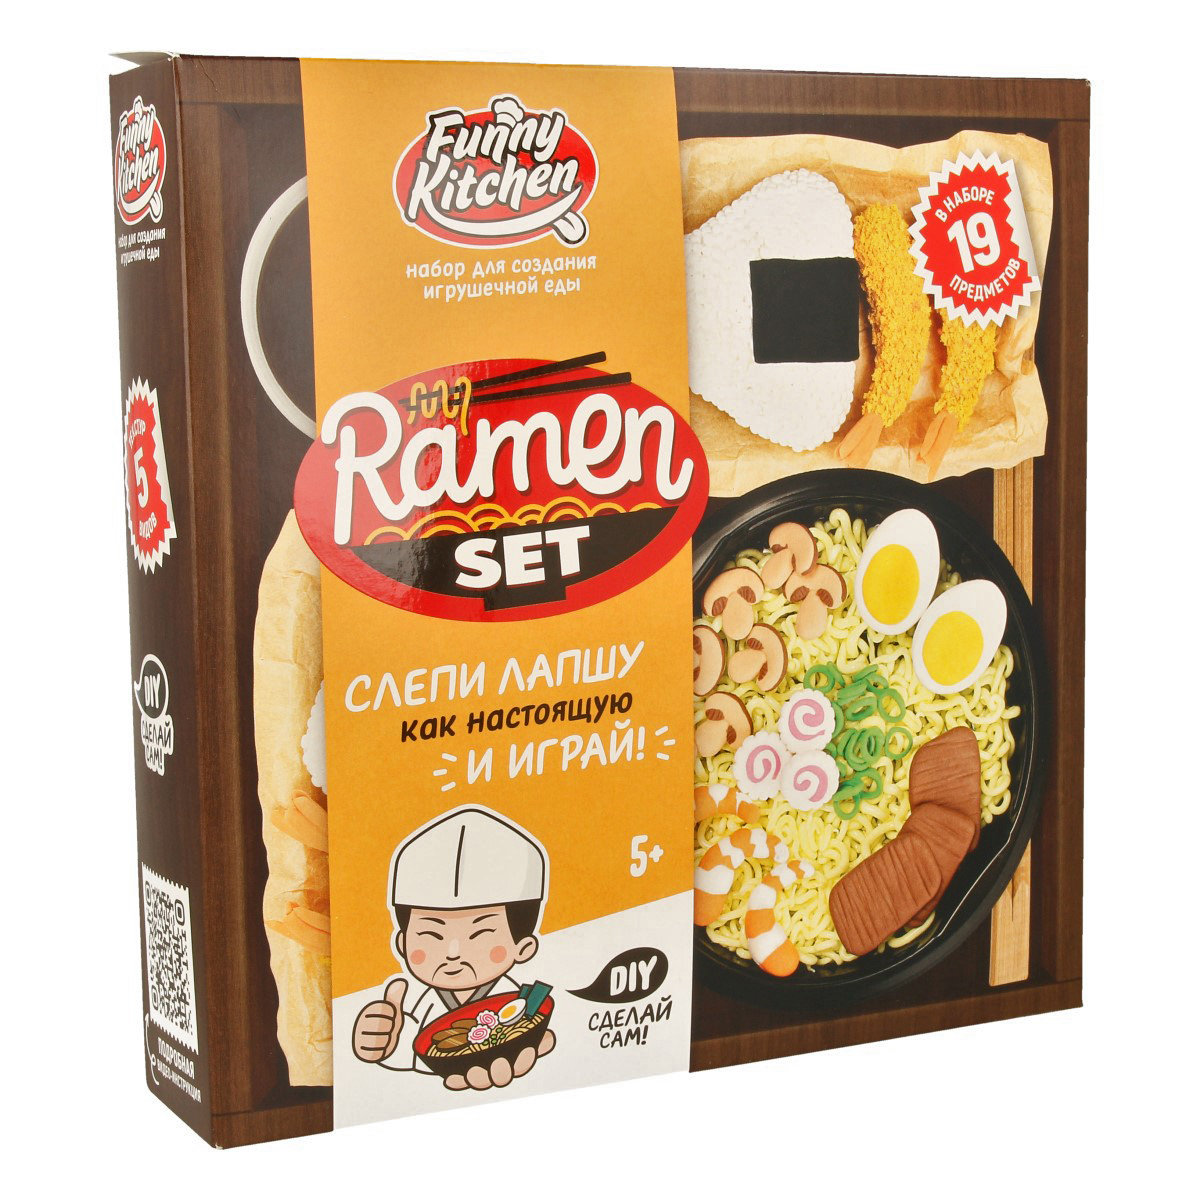 Набор для опытов Funny Kitchen "Ramen set" 150 гр легкий пластилин, слайм, тесто